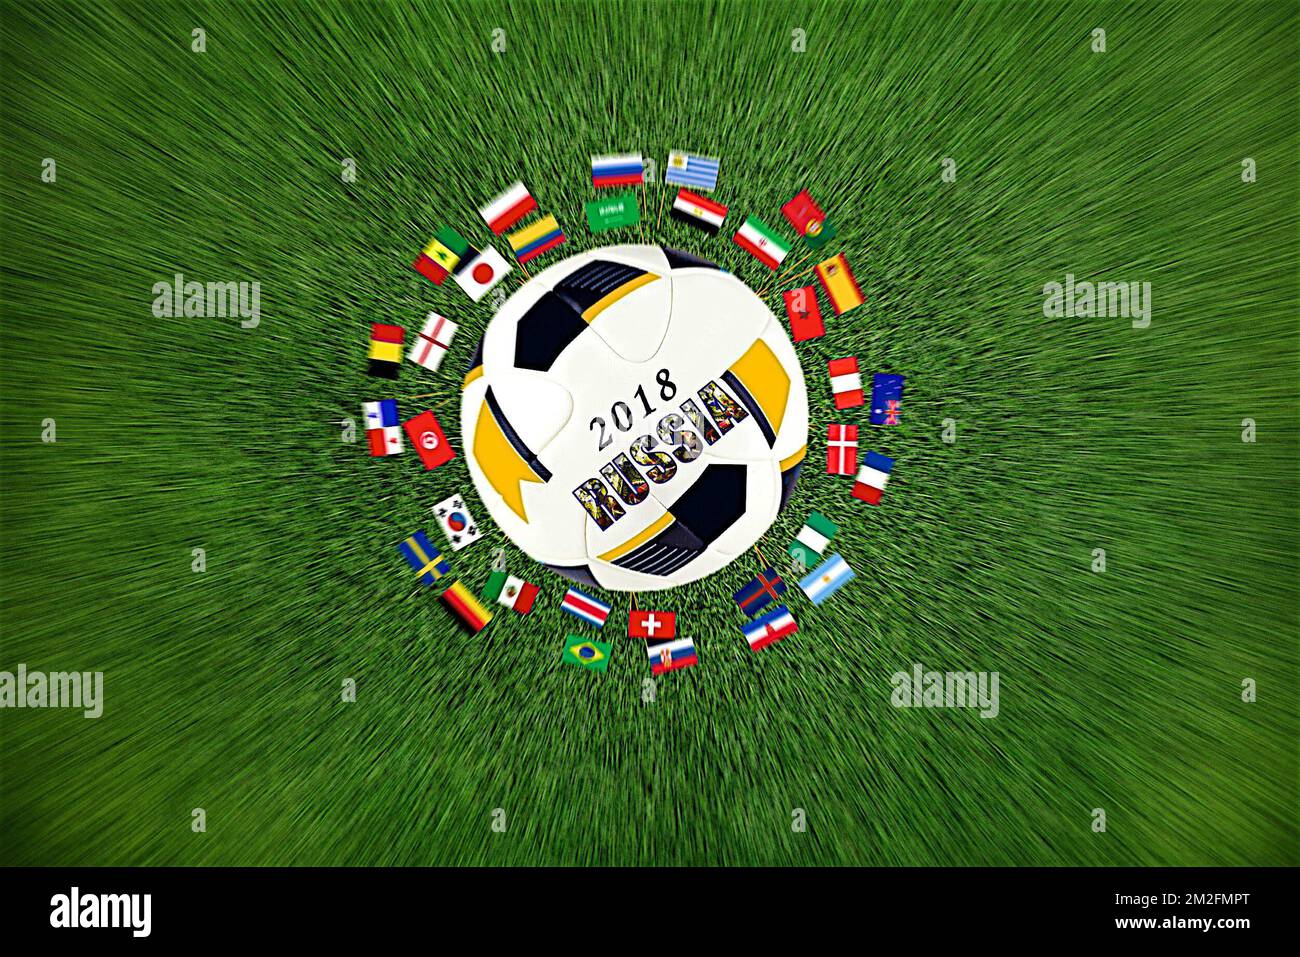 Coupe du monde 2018 russie trophée hi-res stock photography and images -  Alamy